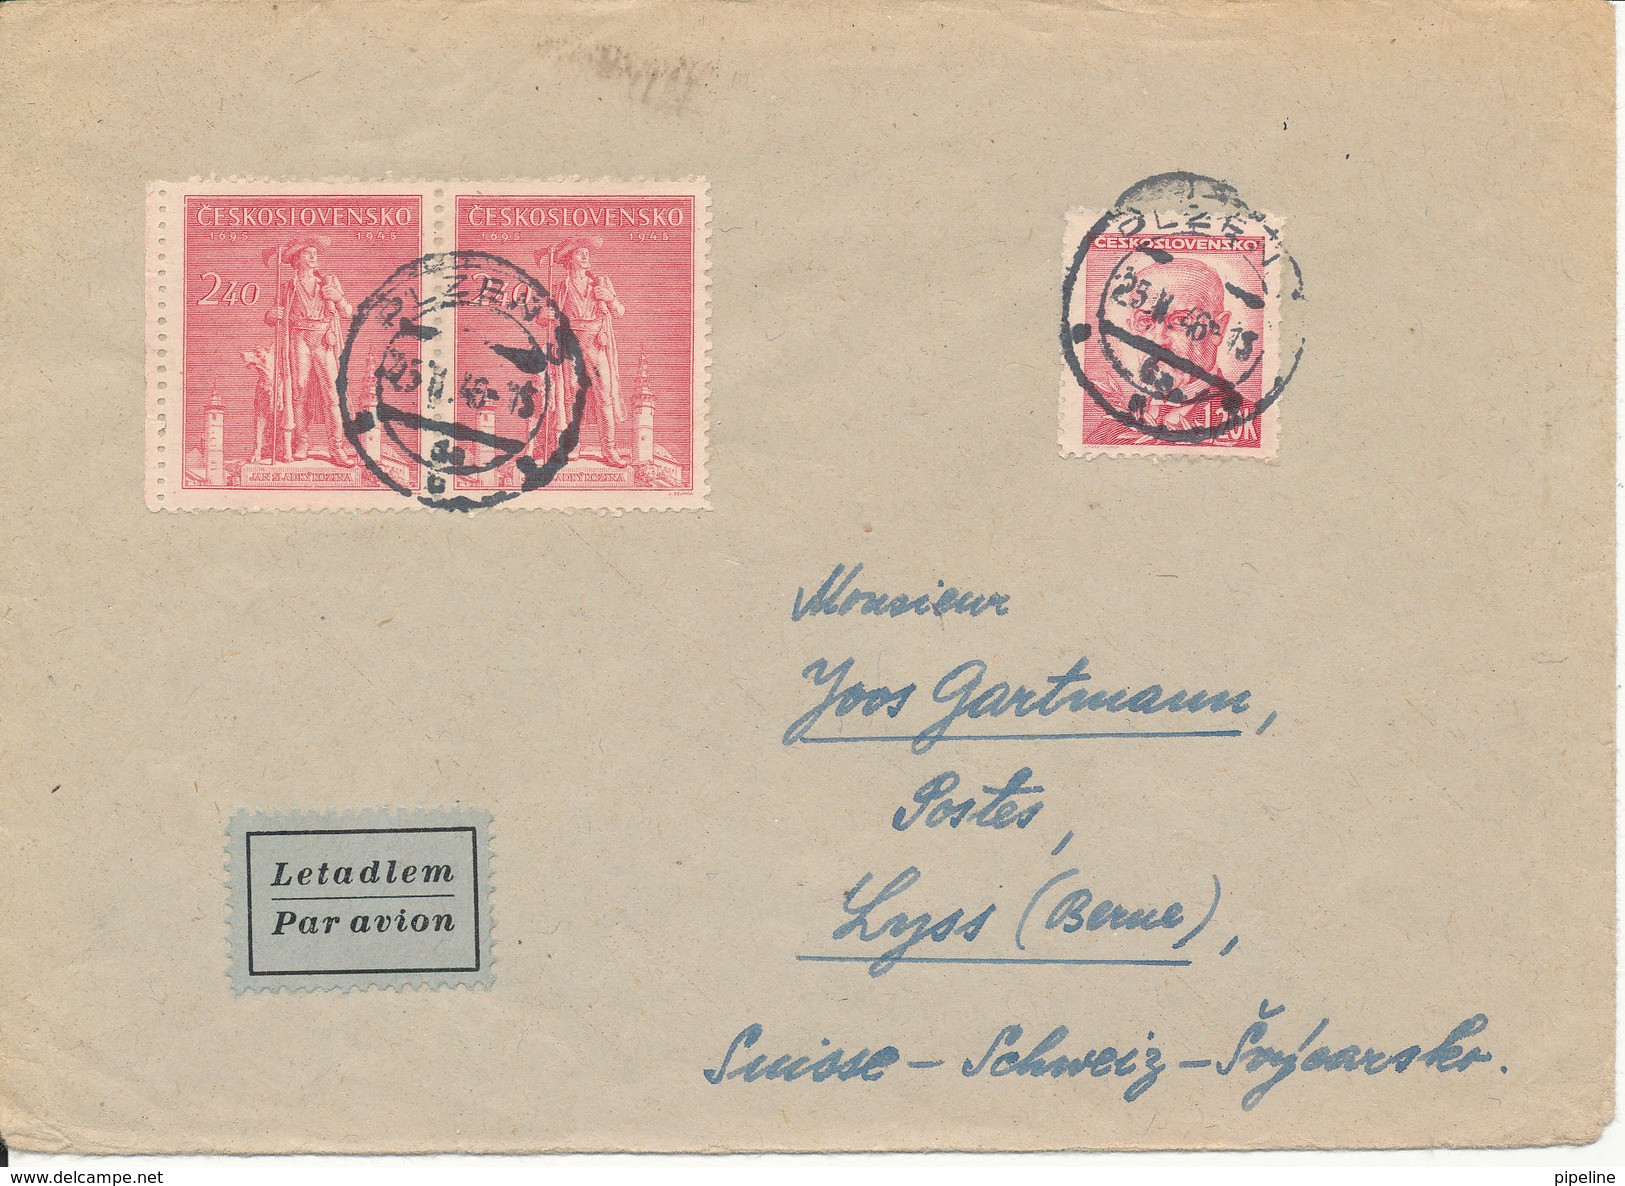 Czechoslovakia Cover Sent To Switzerland 25-2-1946 - Covers & Documents